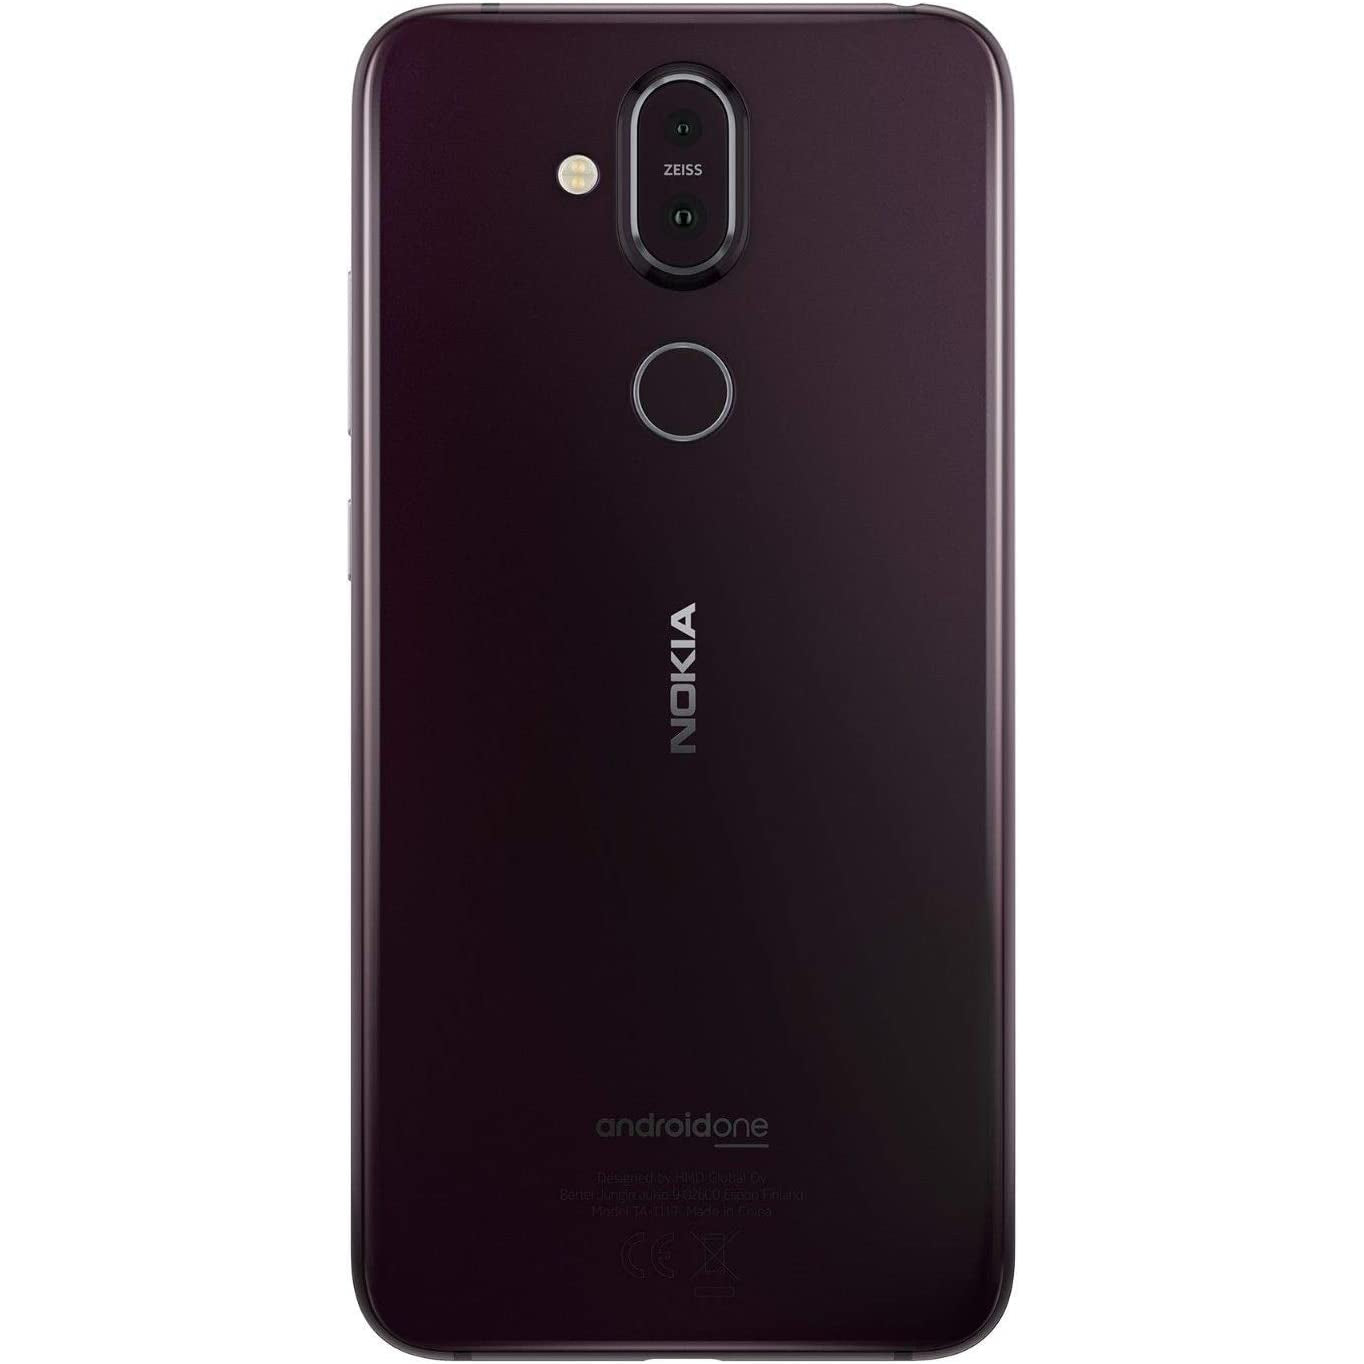 Nokia 8.1 64GB Unlocked Smartphone - Black - Refurbished Good